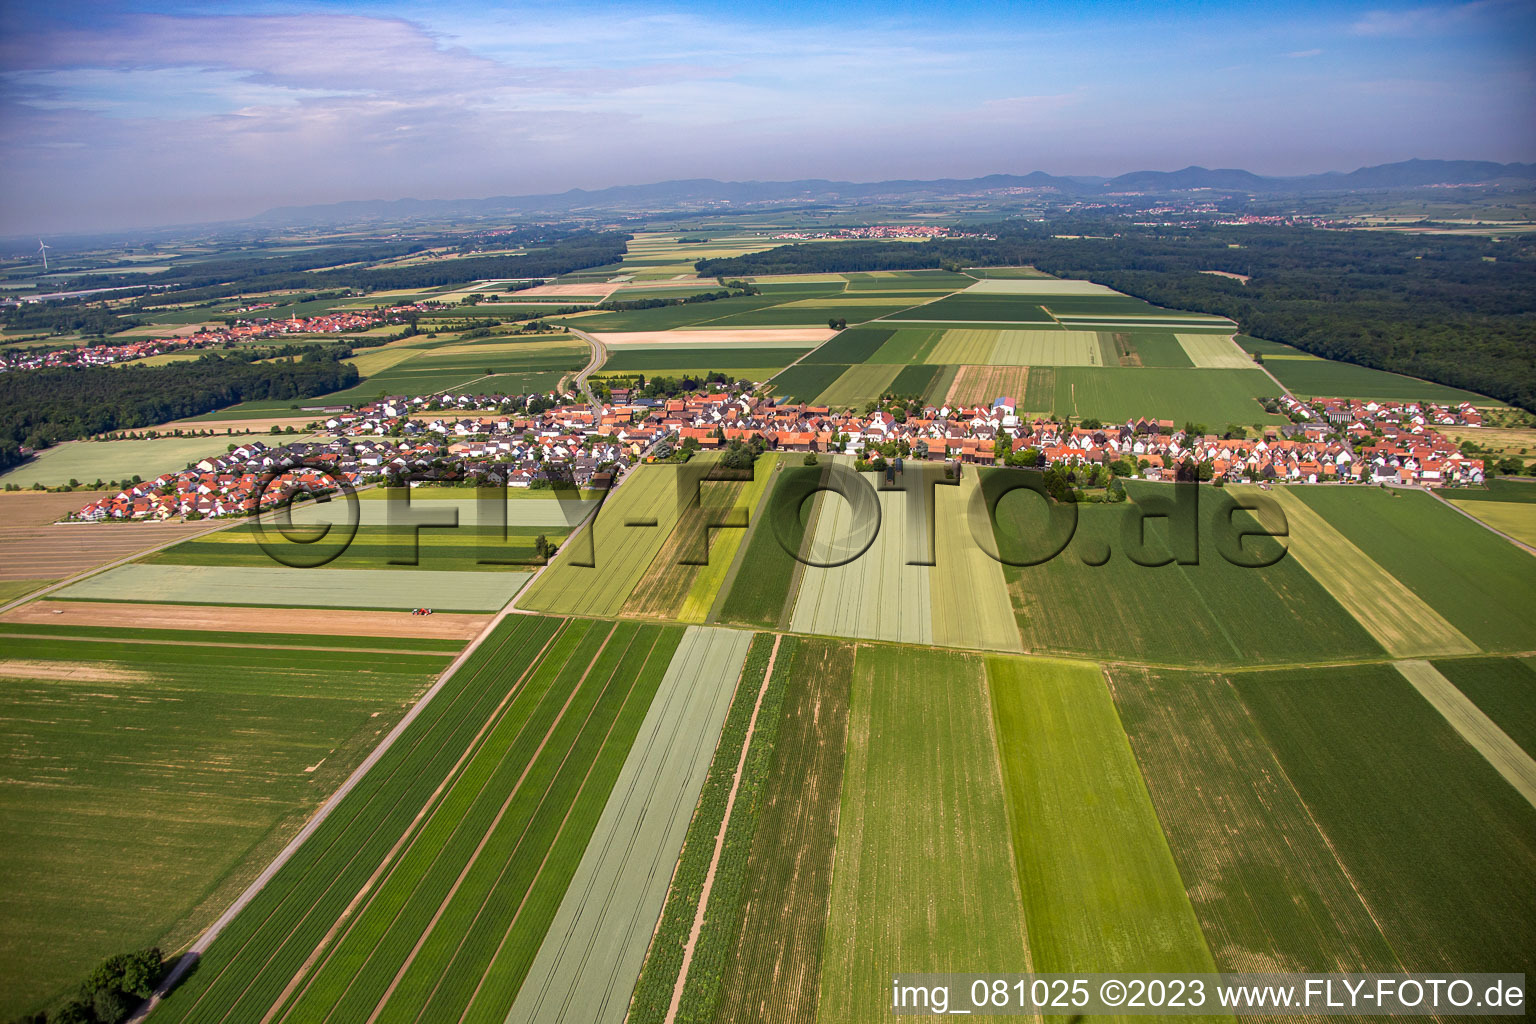 District Hayna in Herxheim bei Landau/Pfalz in the state Rhineland-Palatinate, Germany seen from above